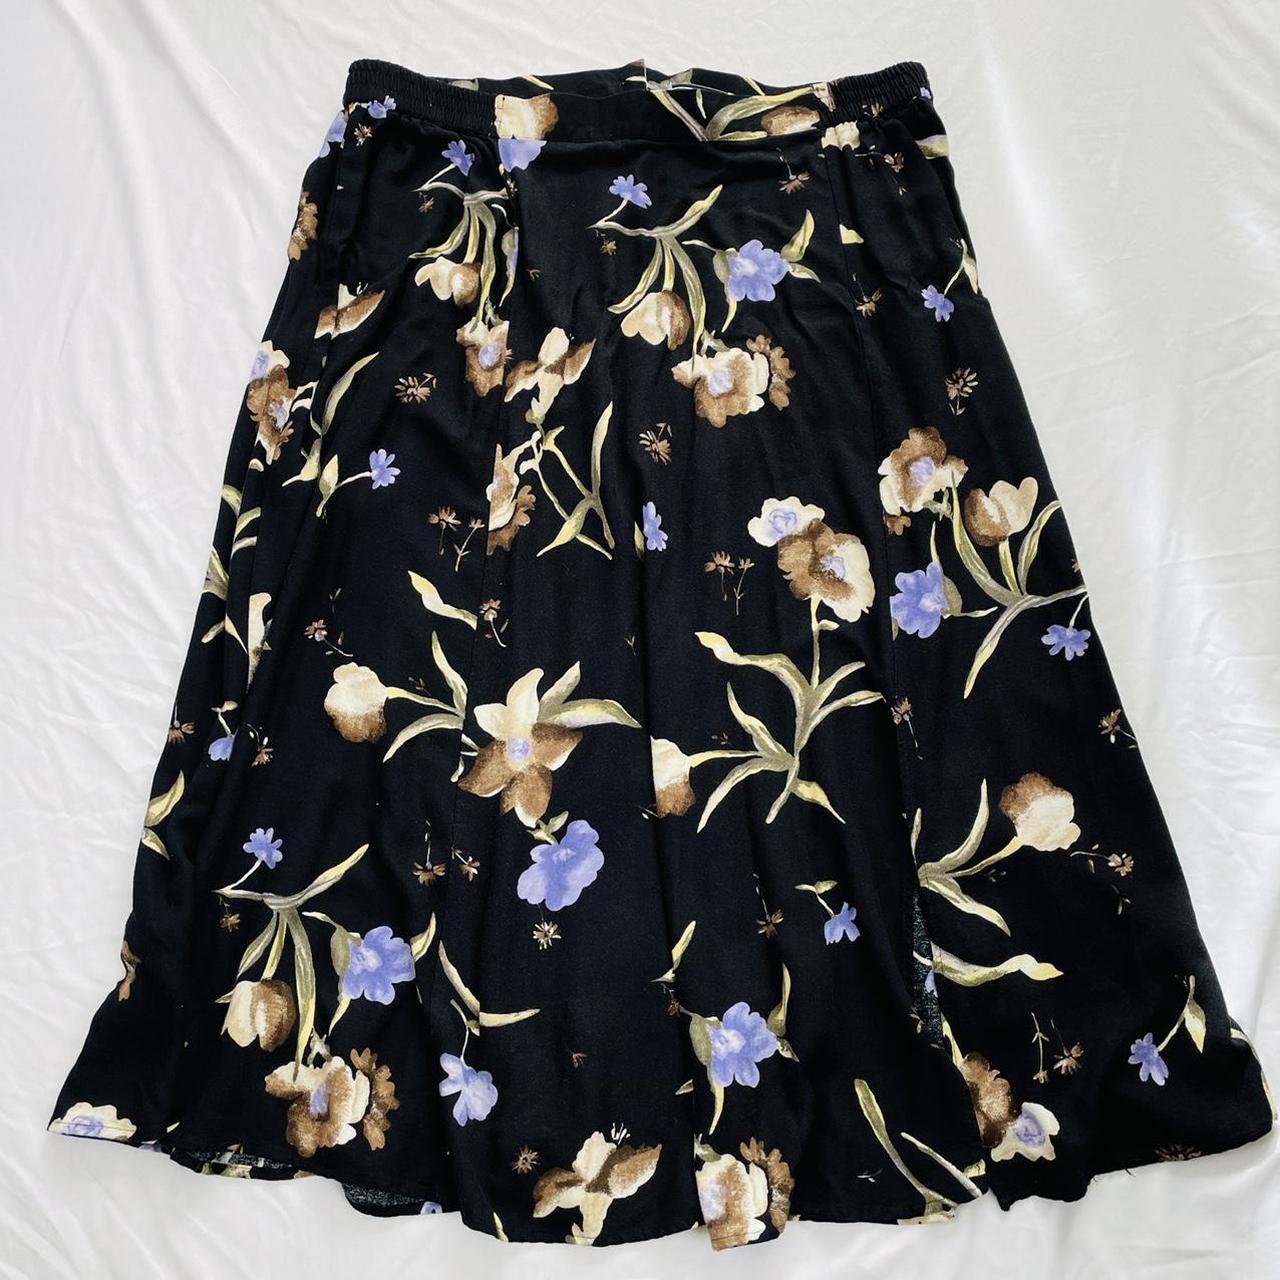 Product Image 1 - black floral skirt 

measurements laid